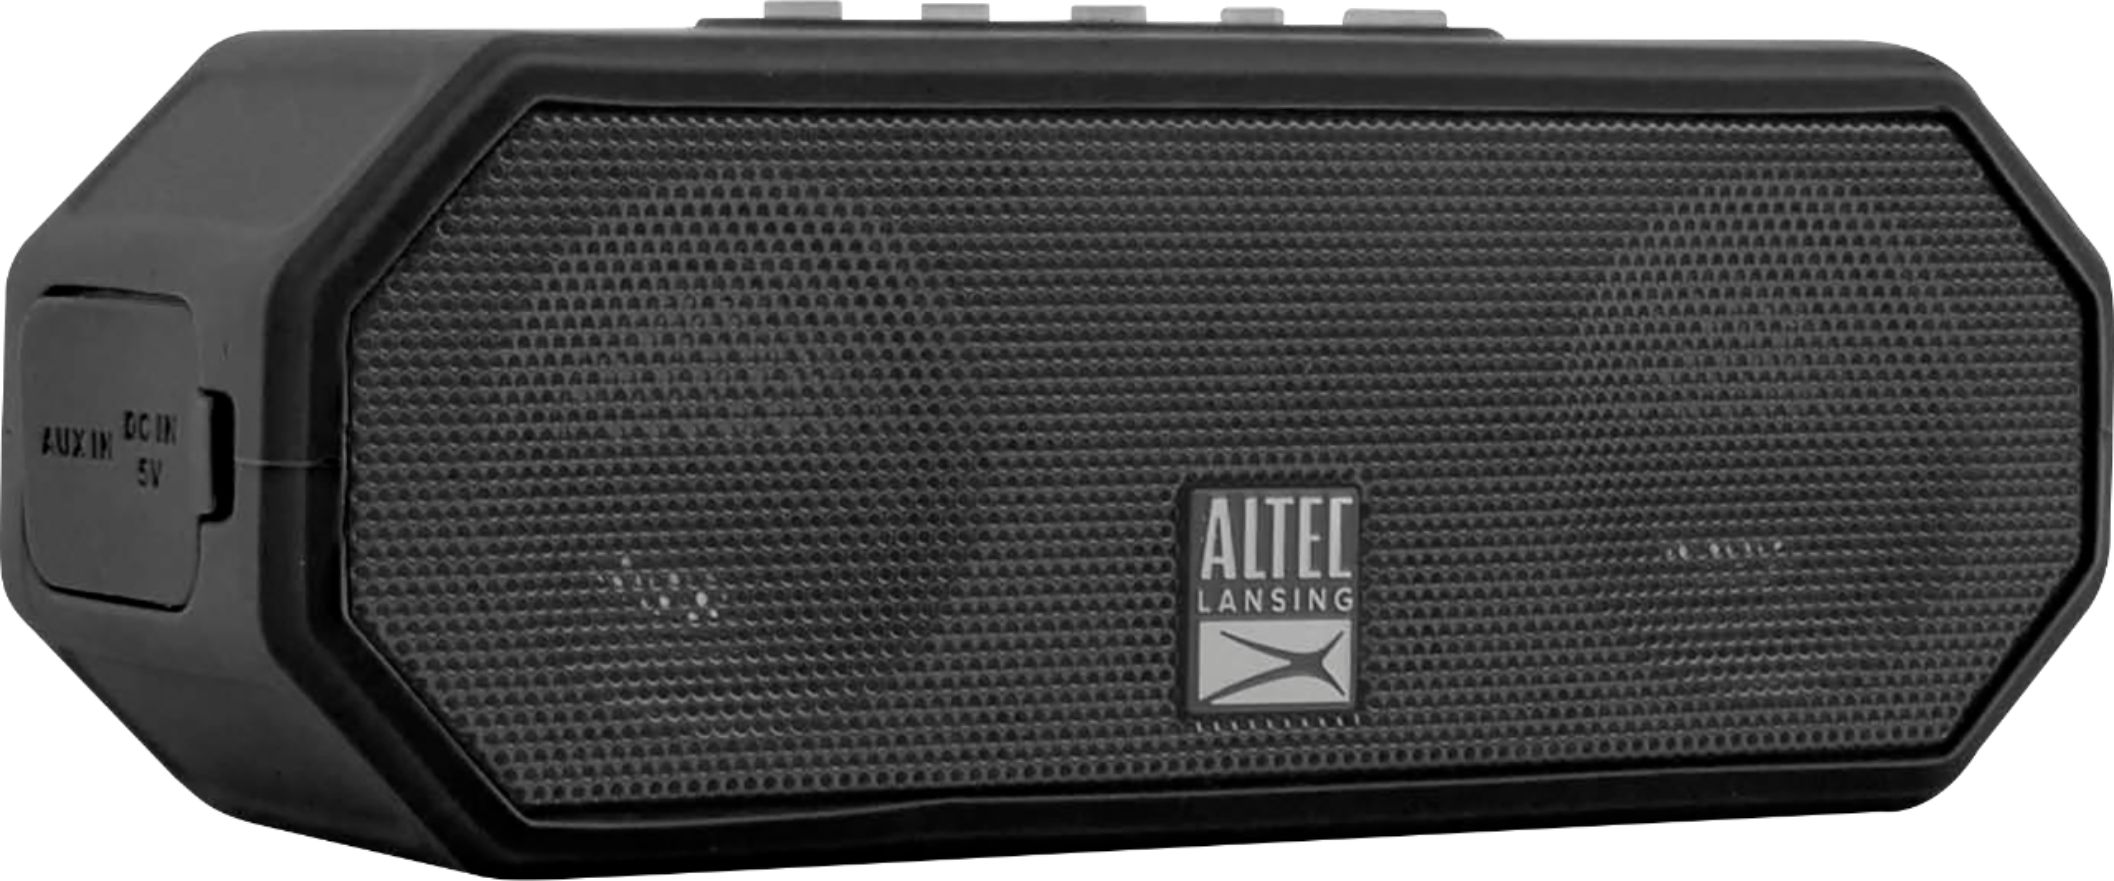 Angle View: iLive - Tailgate ISB408B Portable Bluetooth Speaker - Black